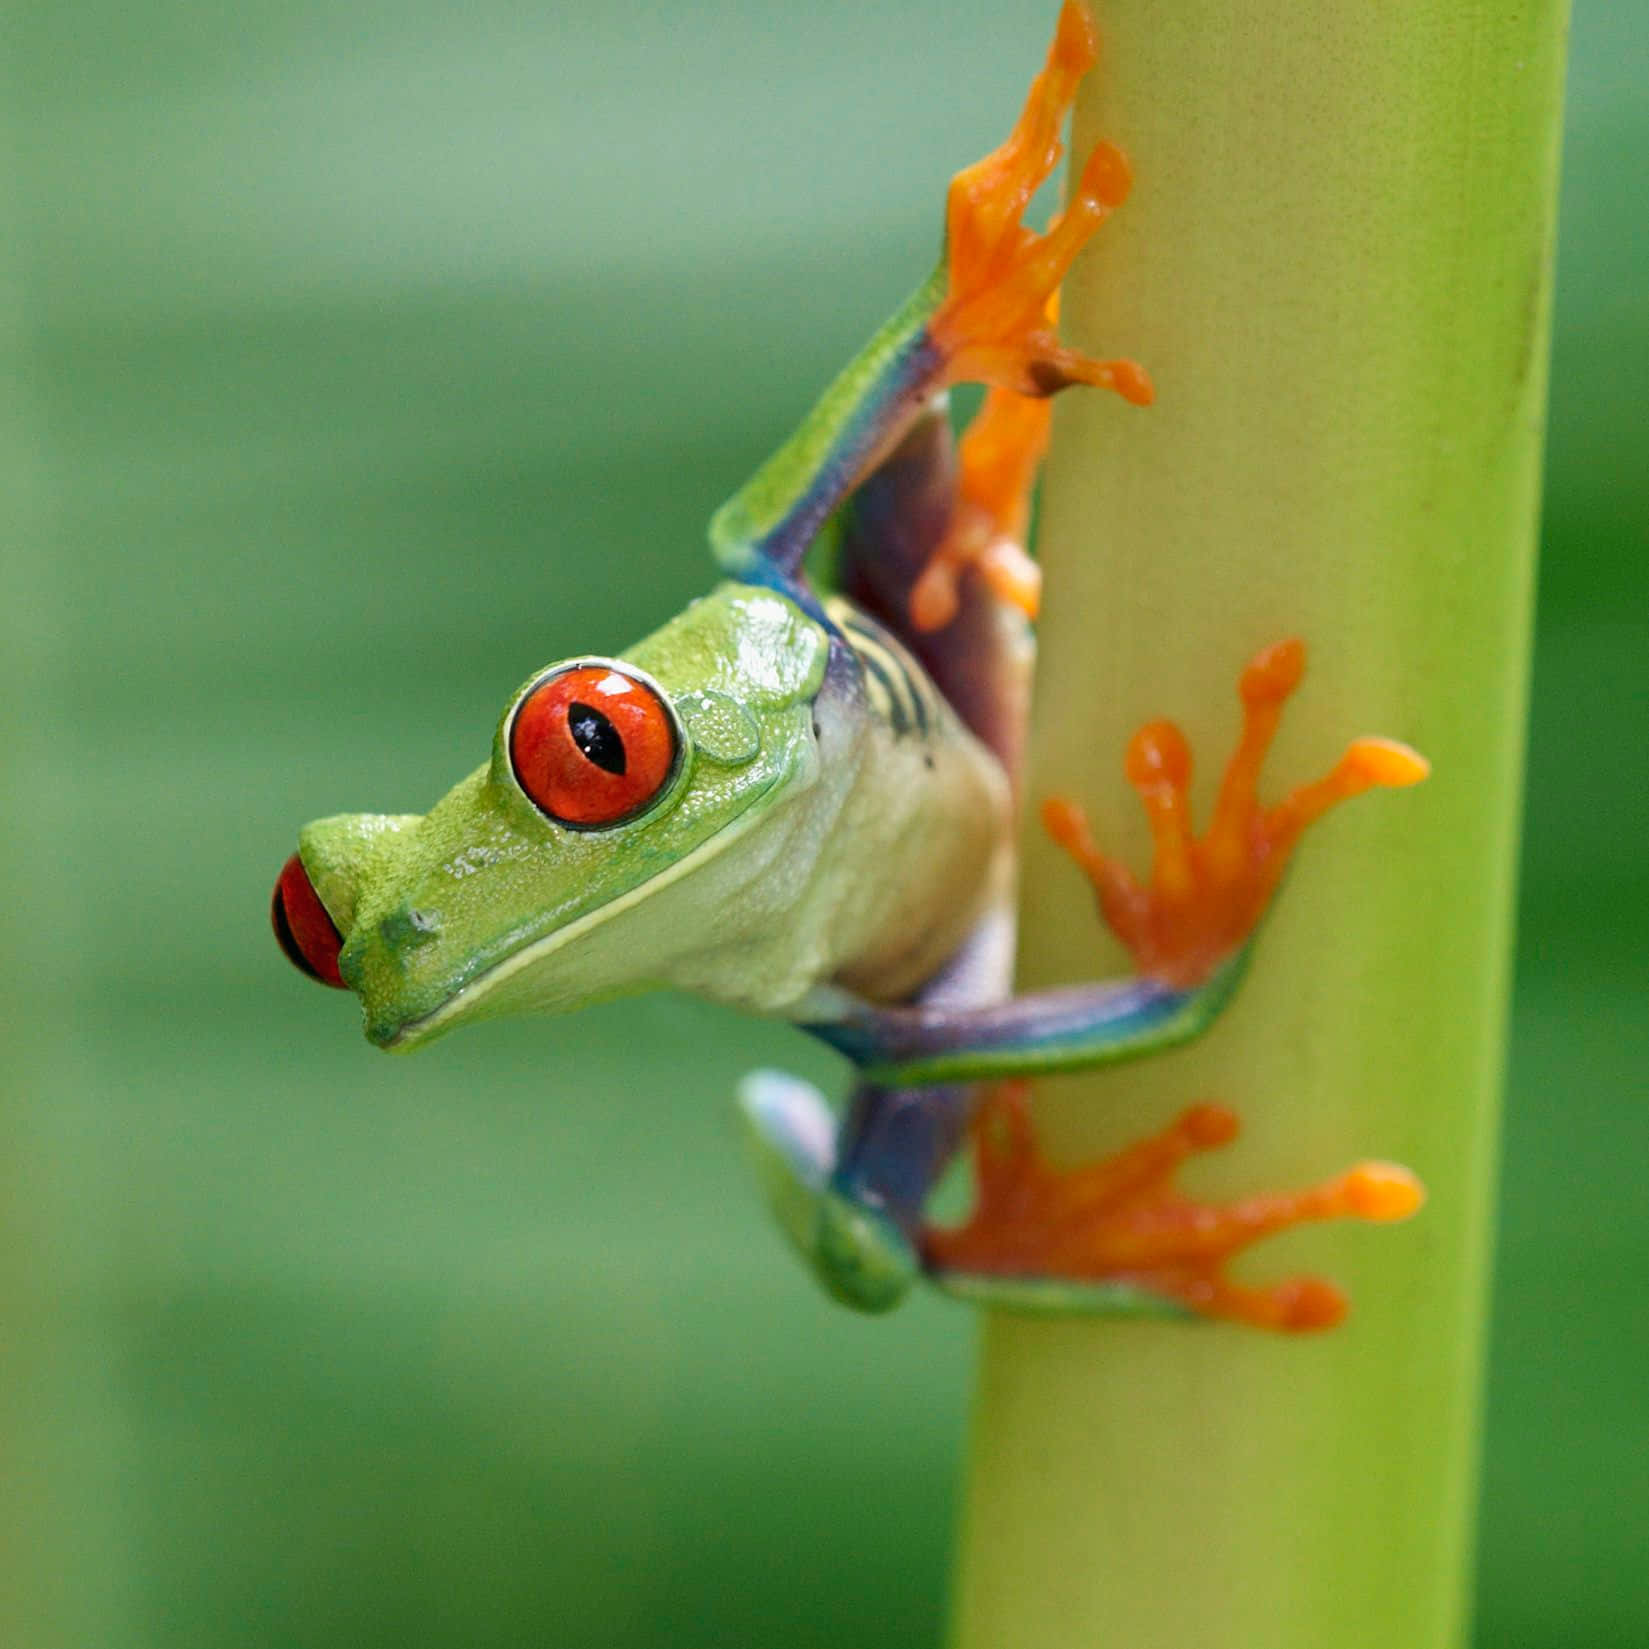 Red Eyed Tree Frog Clinging To Stem.jpg Wallpaper